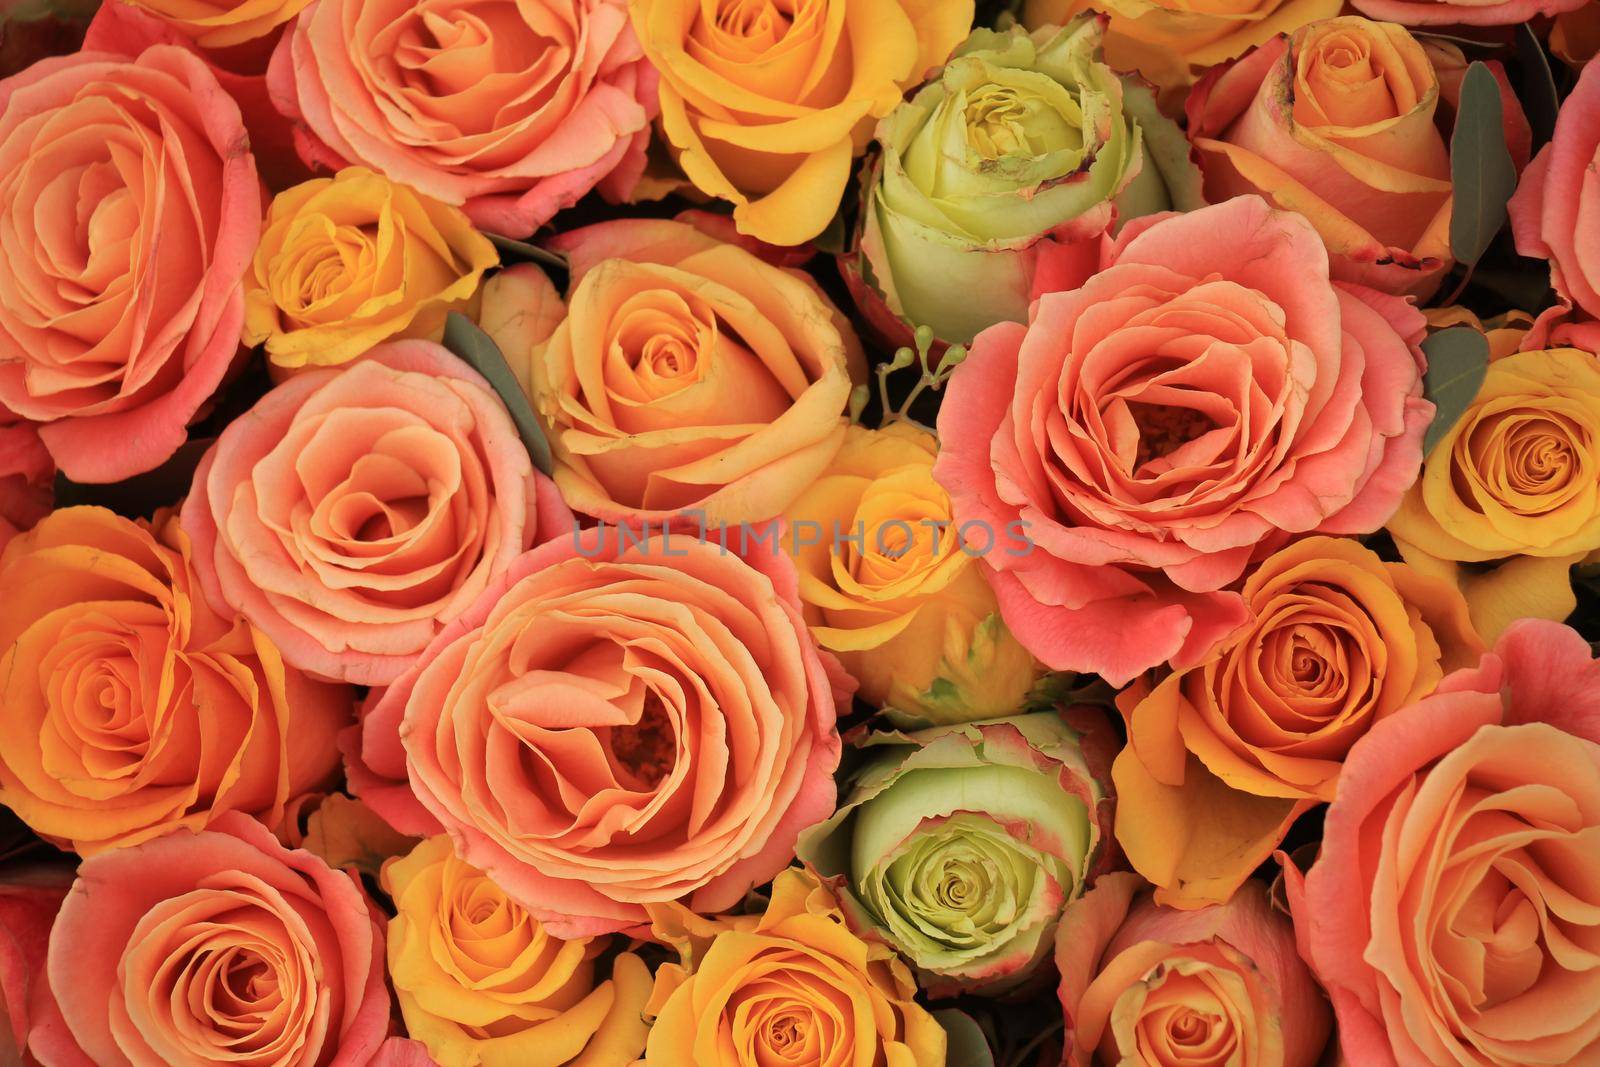 Yellow and orange roses by studioportosabbia